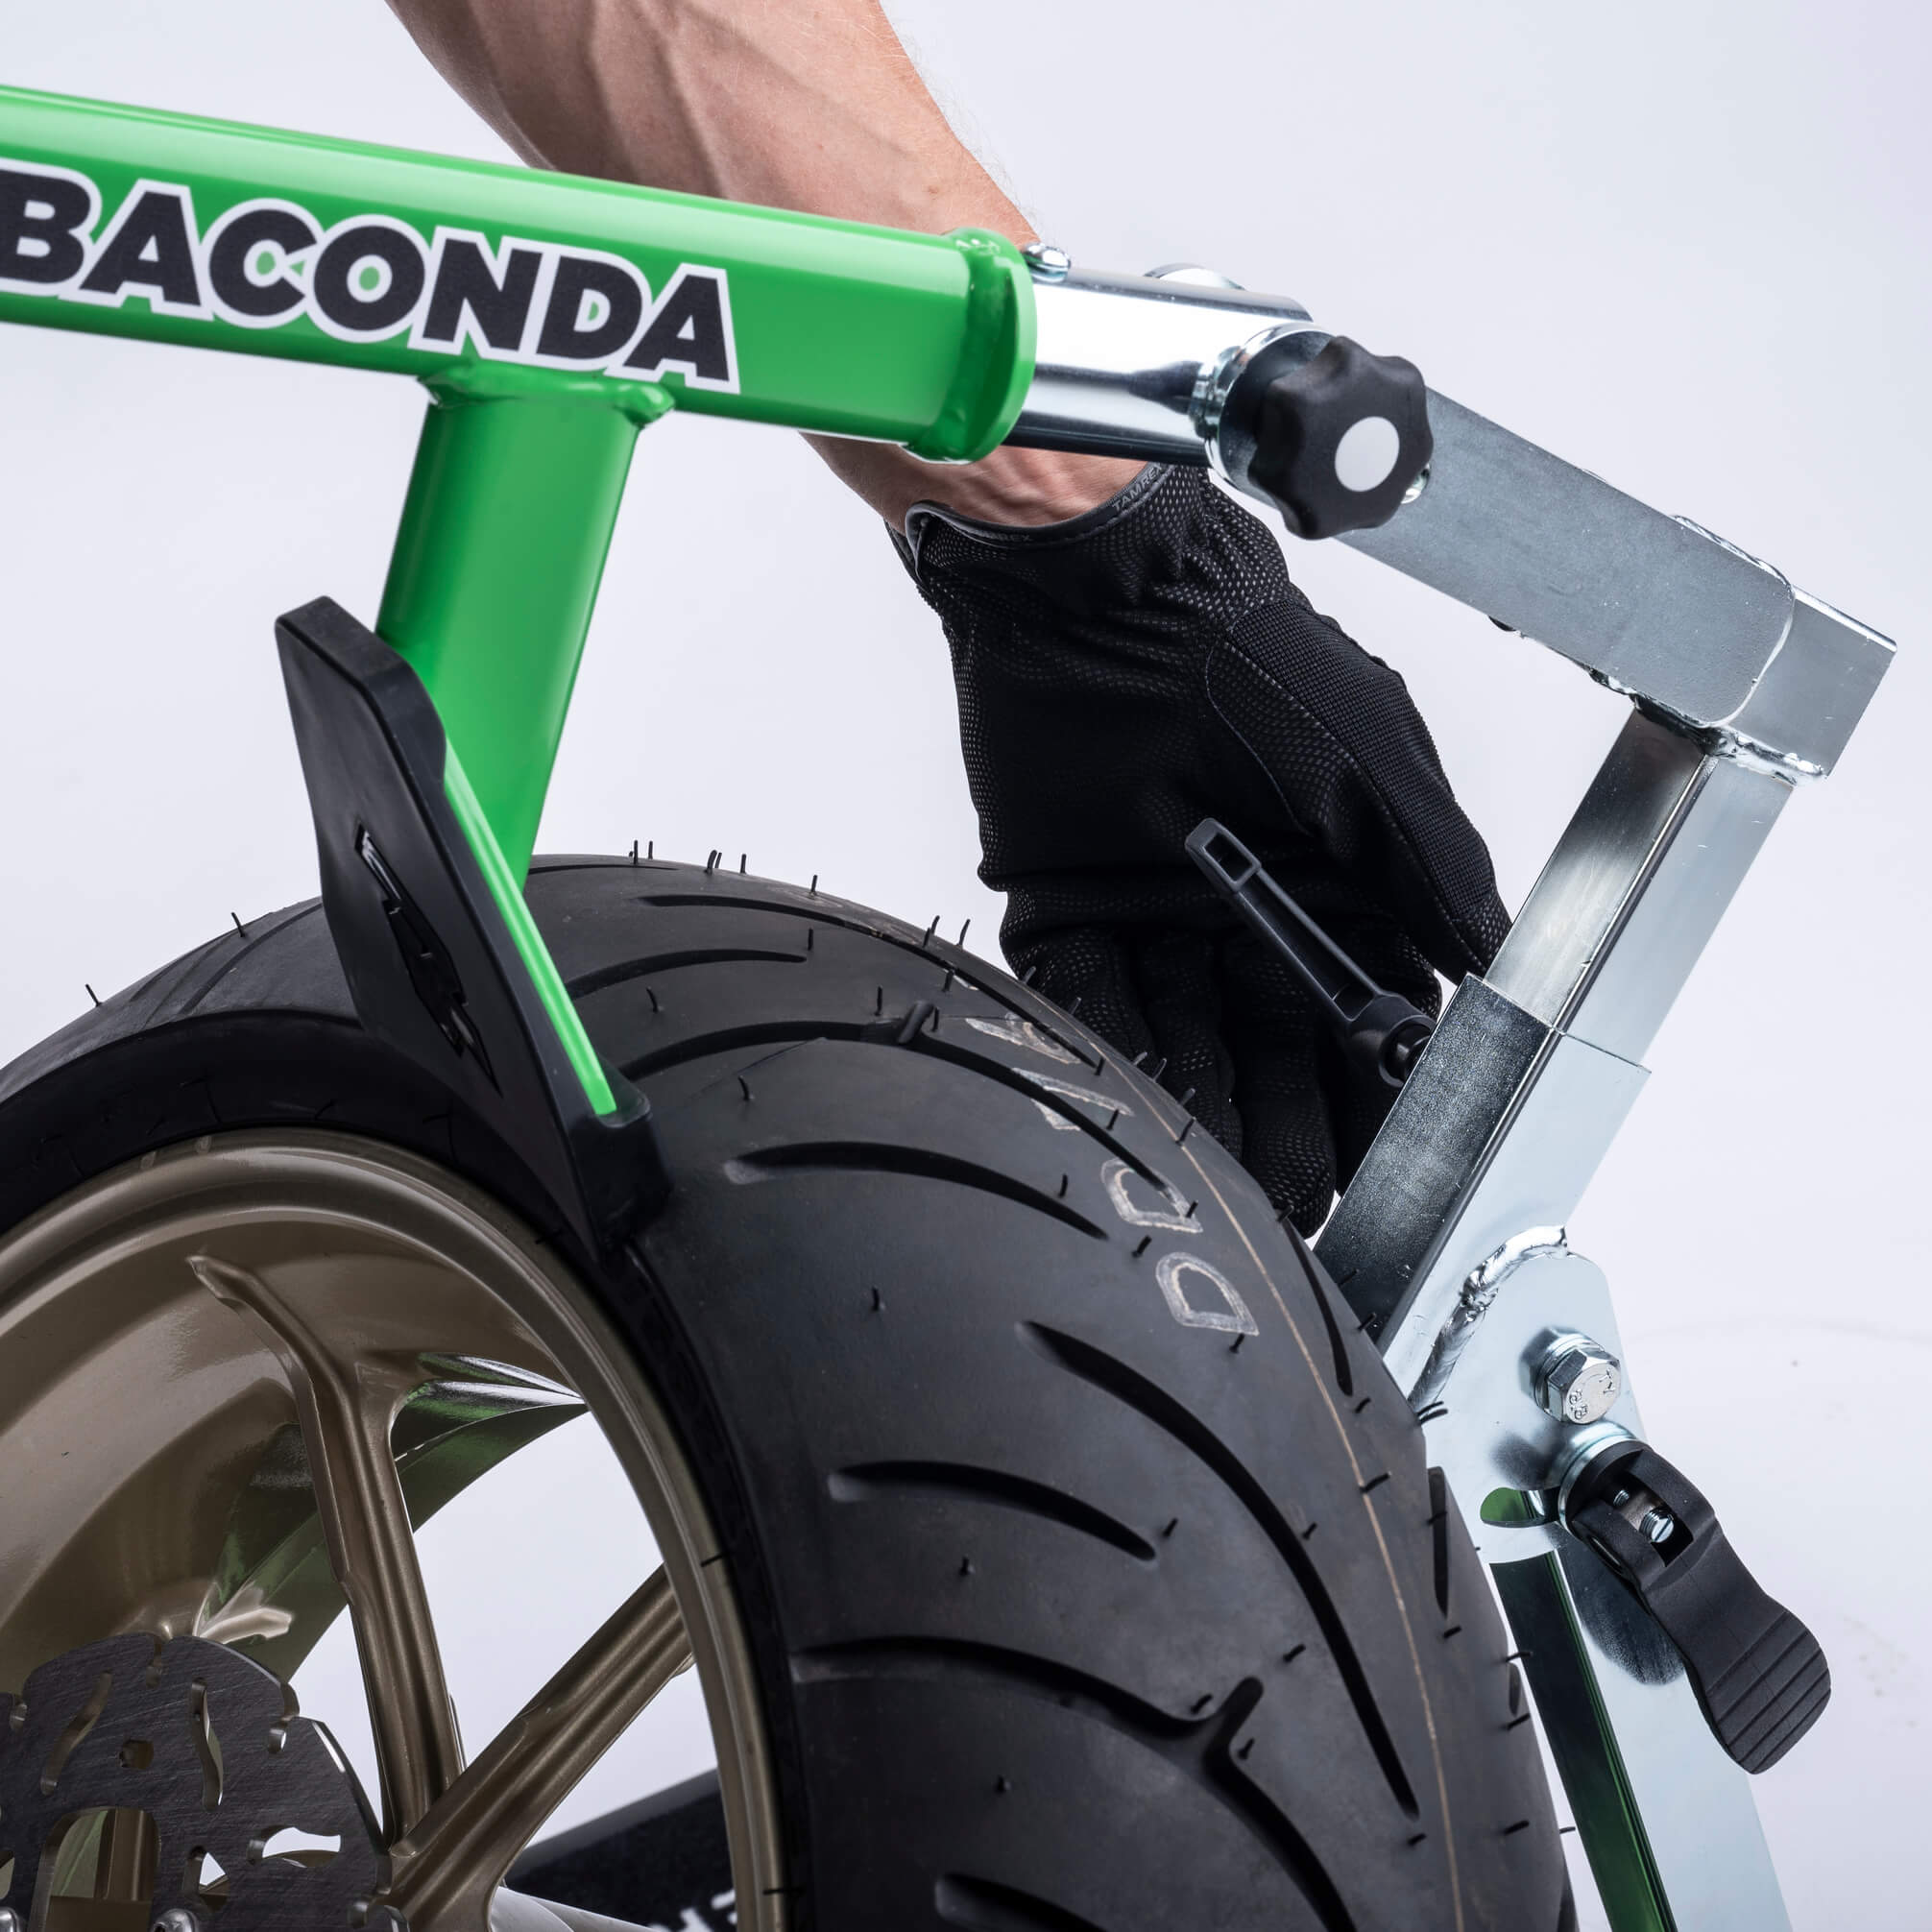 Rabaconda Street Bike Tire Changer